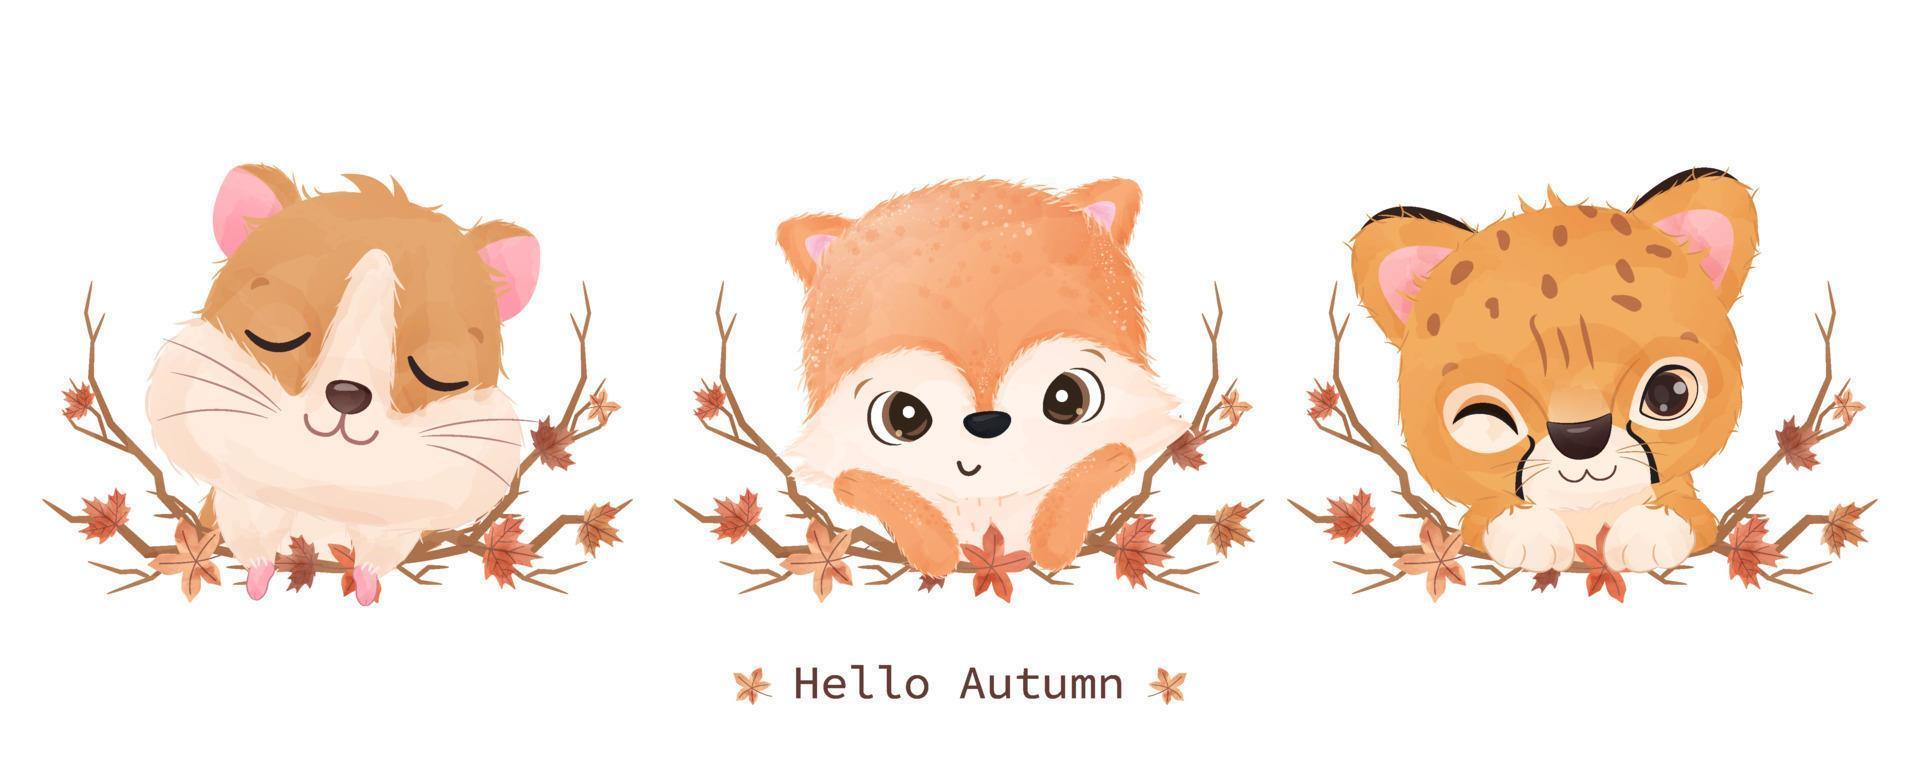 Cute little animals illustration for autumn decoration vector